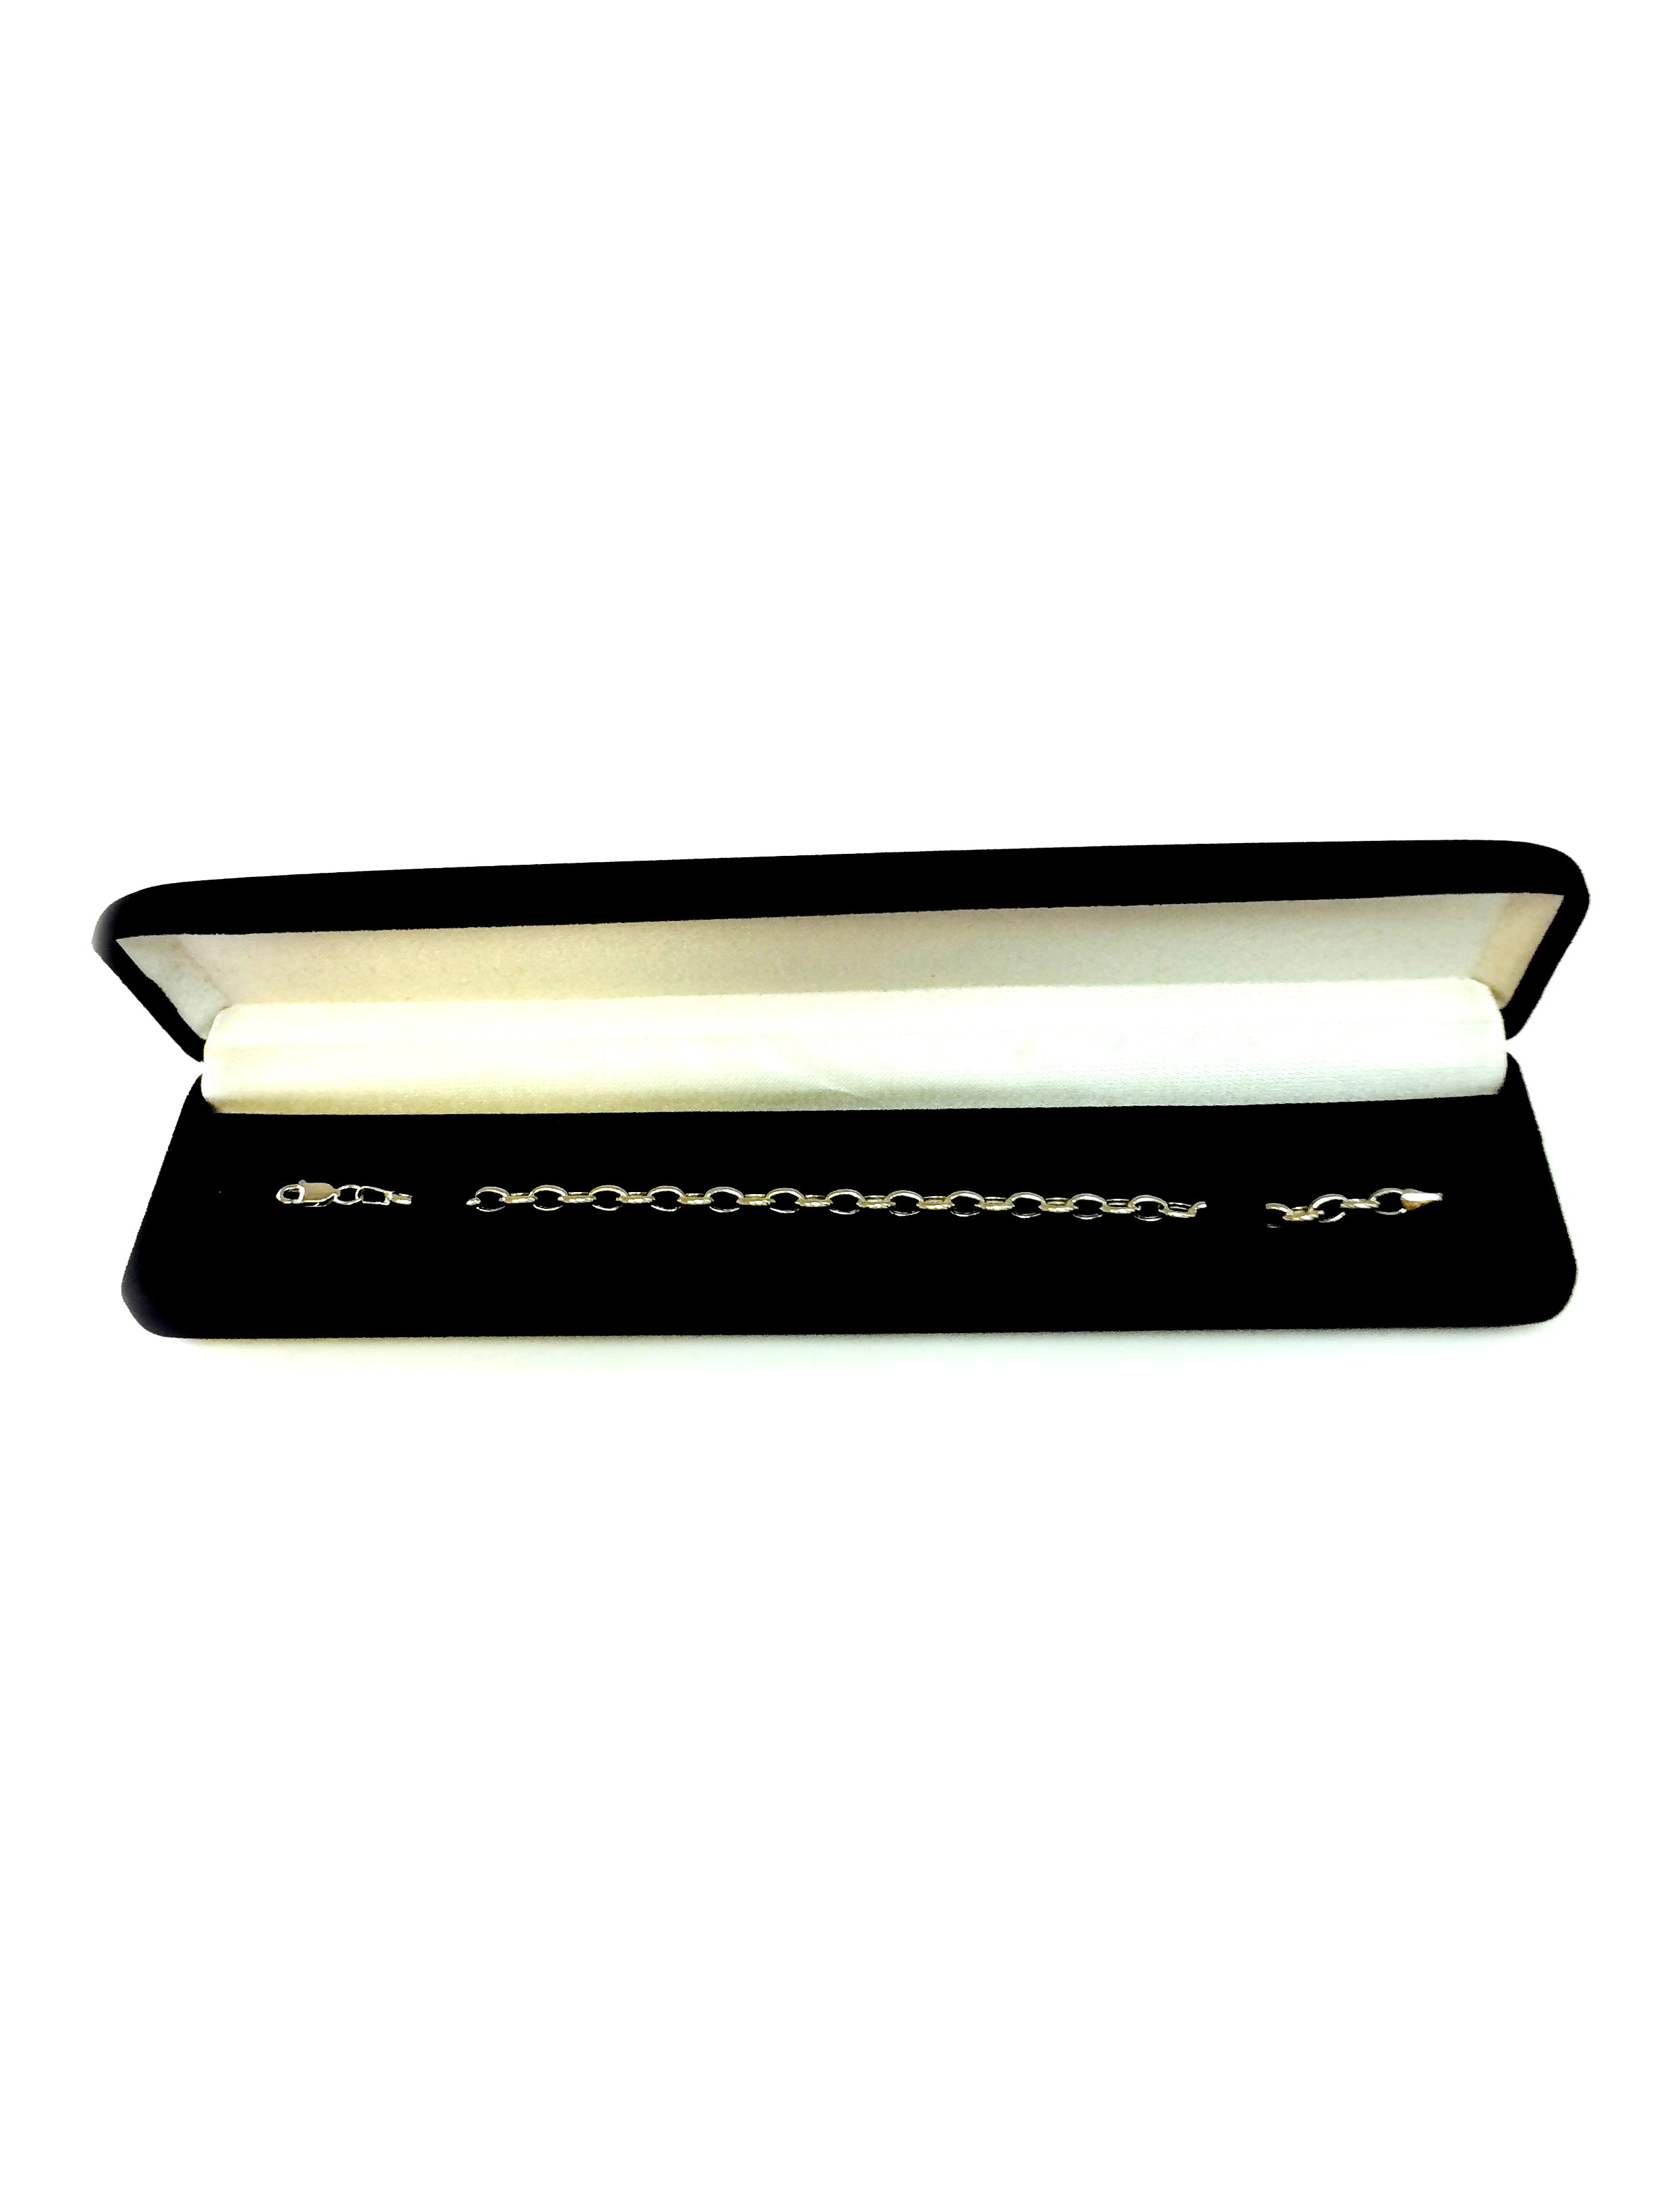 14k White Gold Oval Rolo Link Chain Bracelet, 4.6mm, 7" fine designer jewelry for men and women